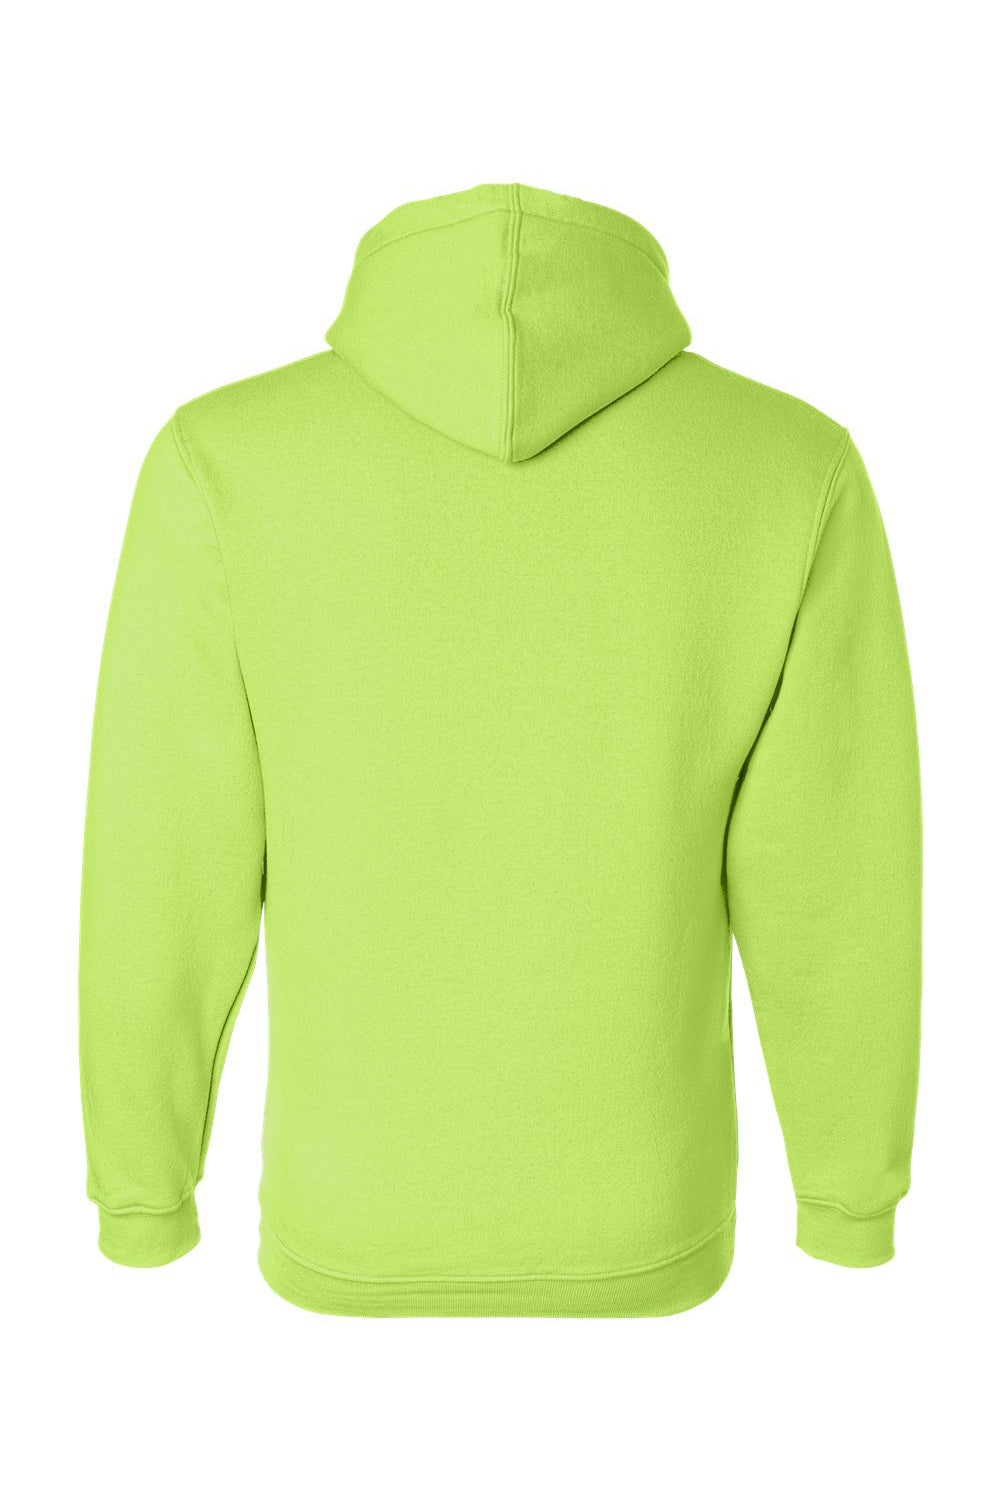 Bayside BA960 Mens USA Made Hooded Sweatshirt Hoodie Lime Green Flat Back